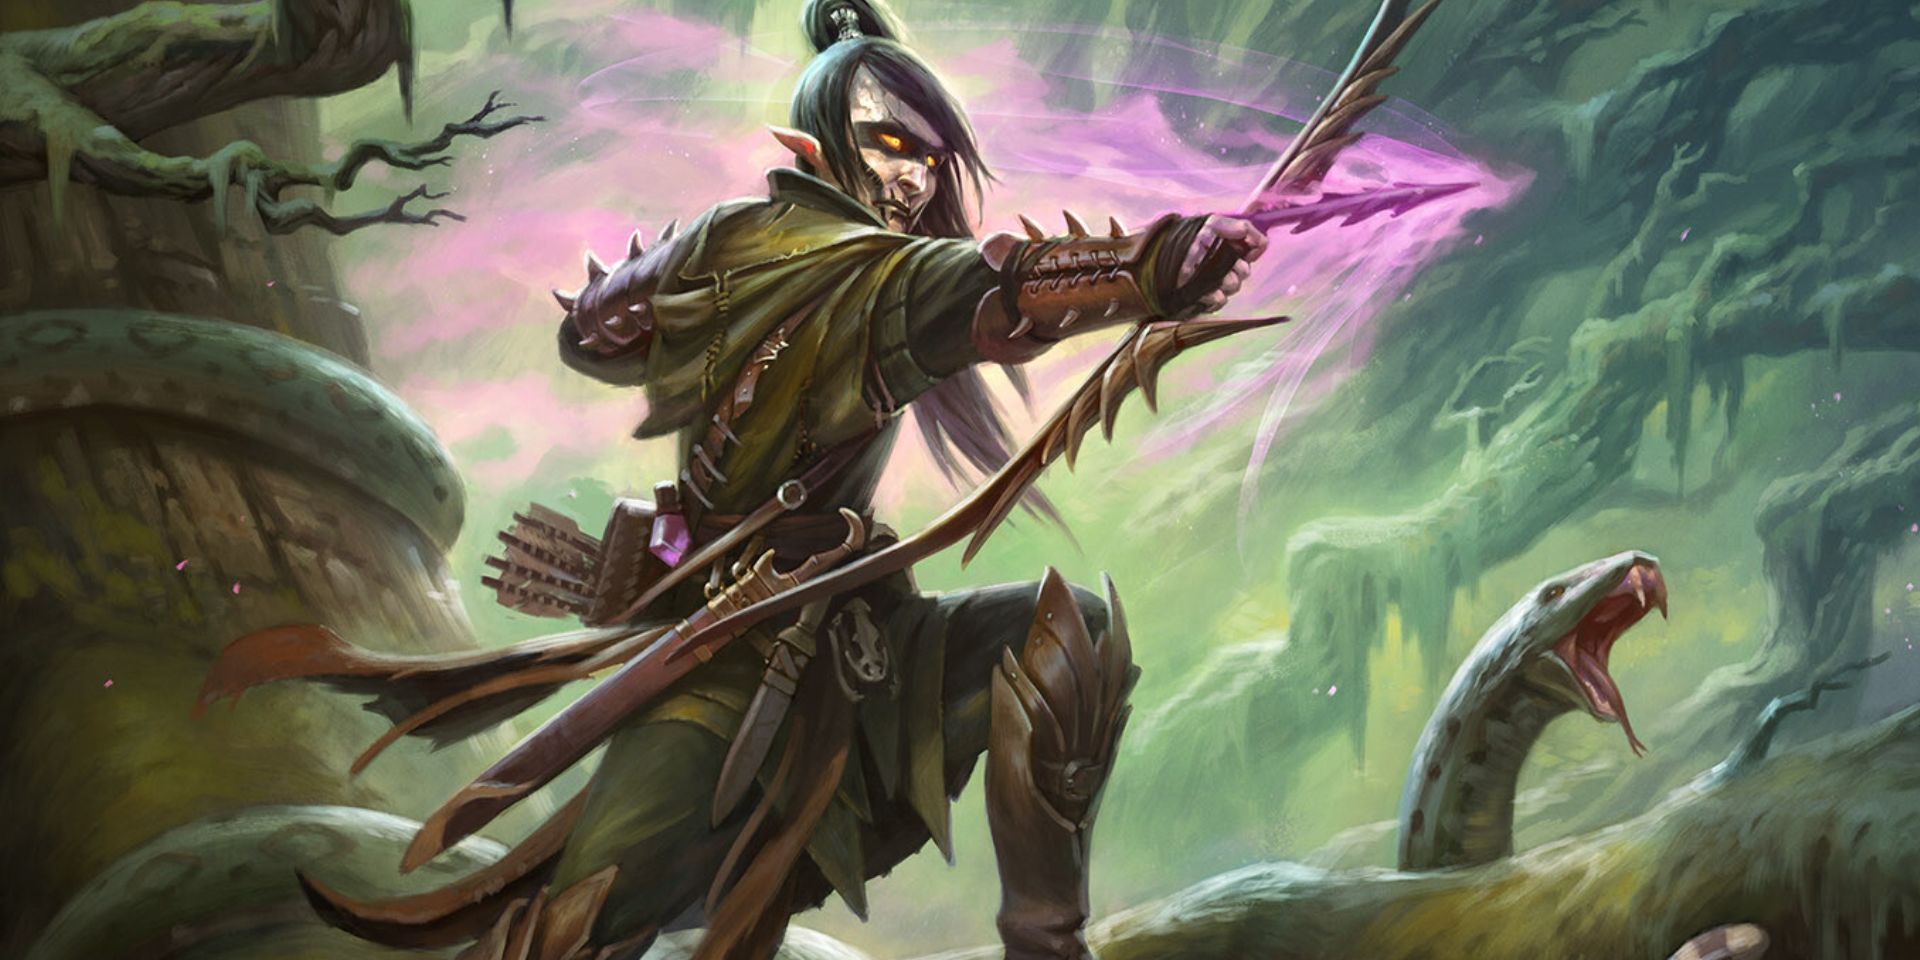 An archer clad in dark green with a glowing purple arrow.